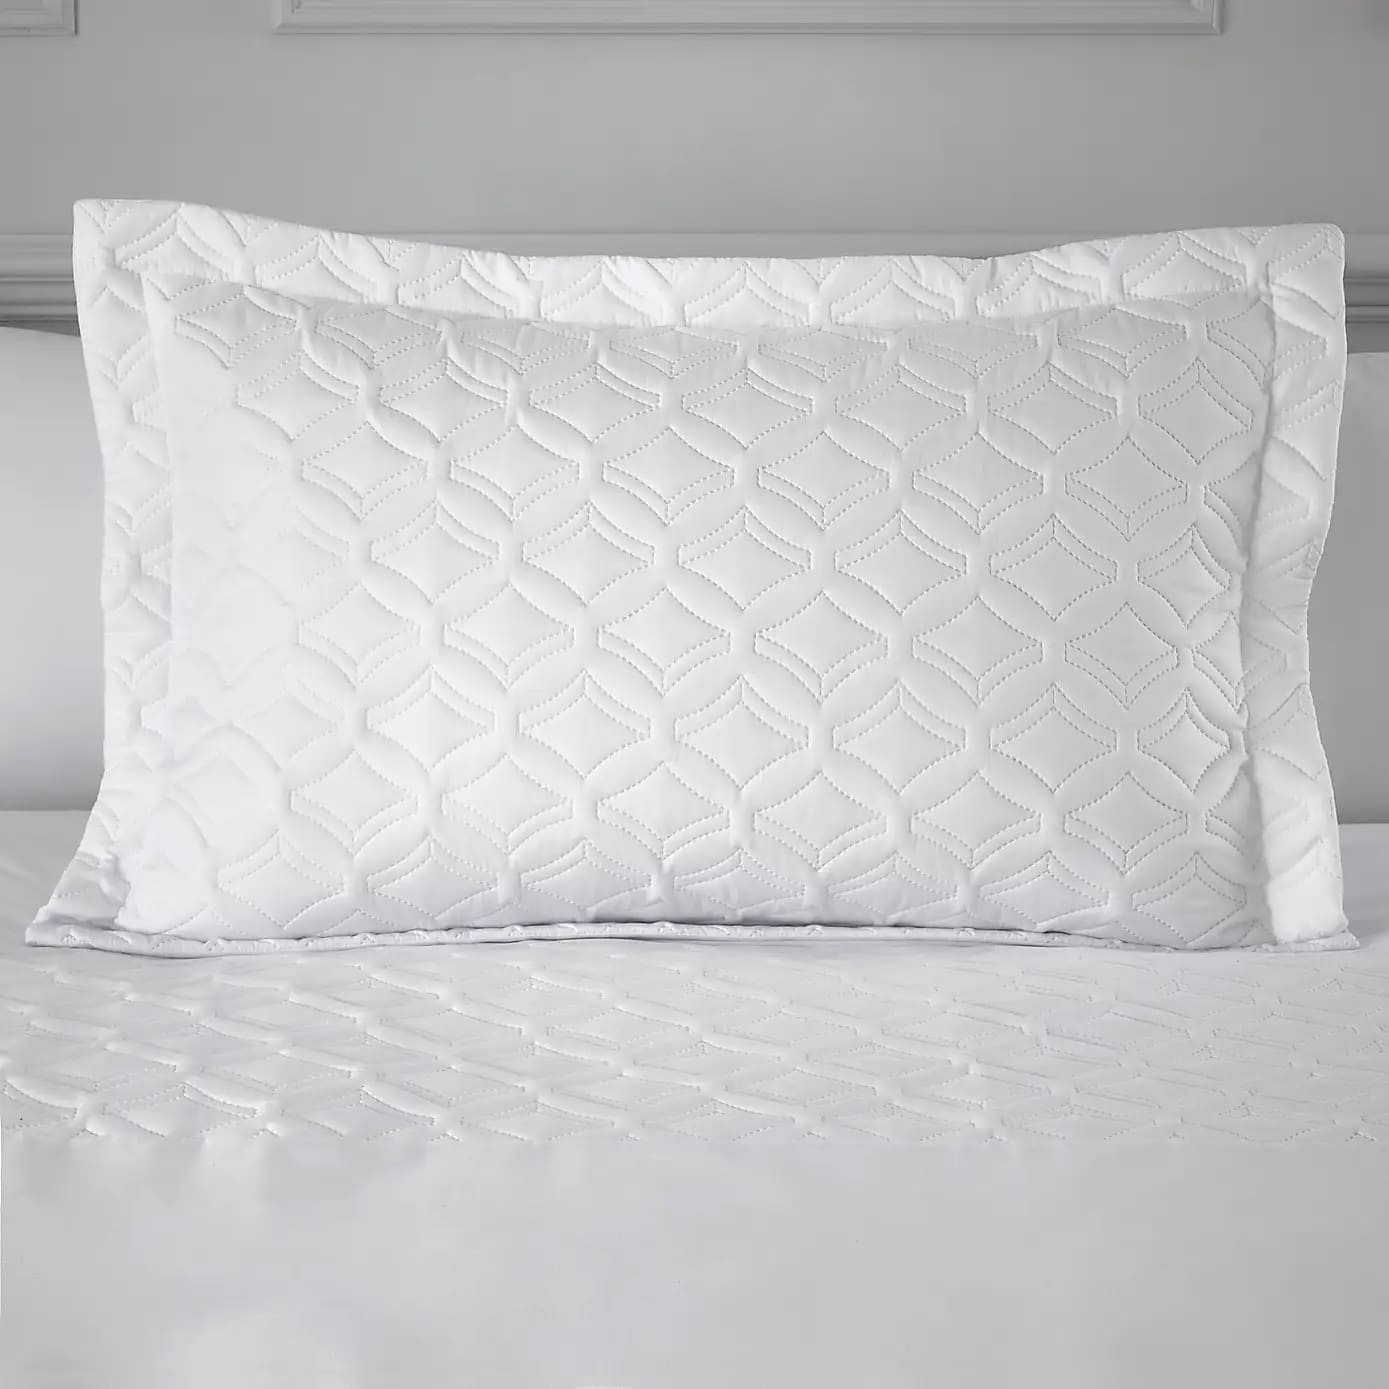 Pinsonic-Duvet-Cover-and-Pillowcase-Set-White